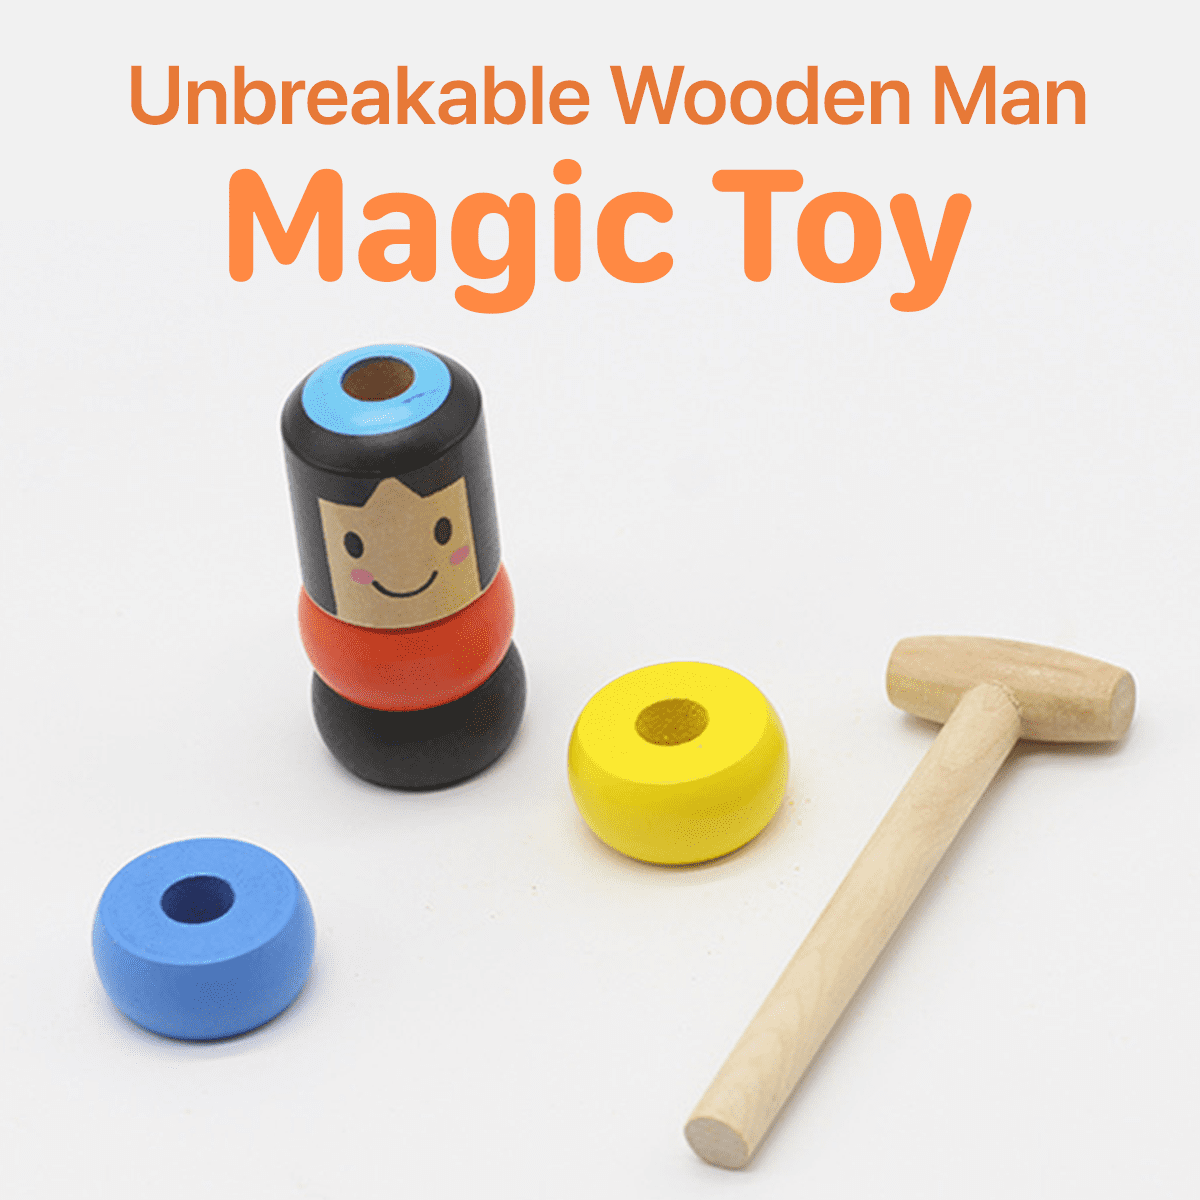 Daruma Wooden Magic Doll Toy 2019 Little Stubborn Wood Man Funny Toy Unbreakable 